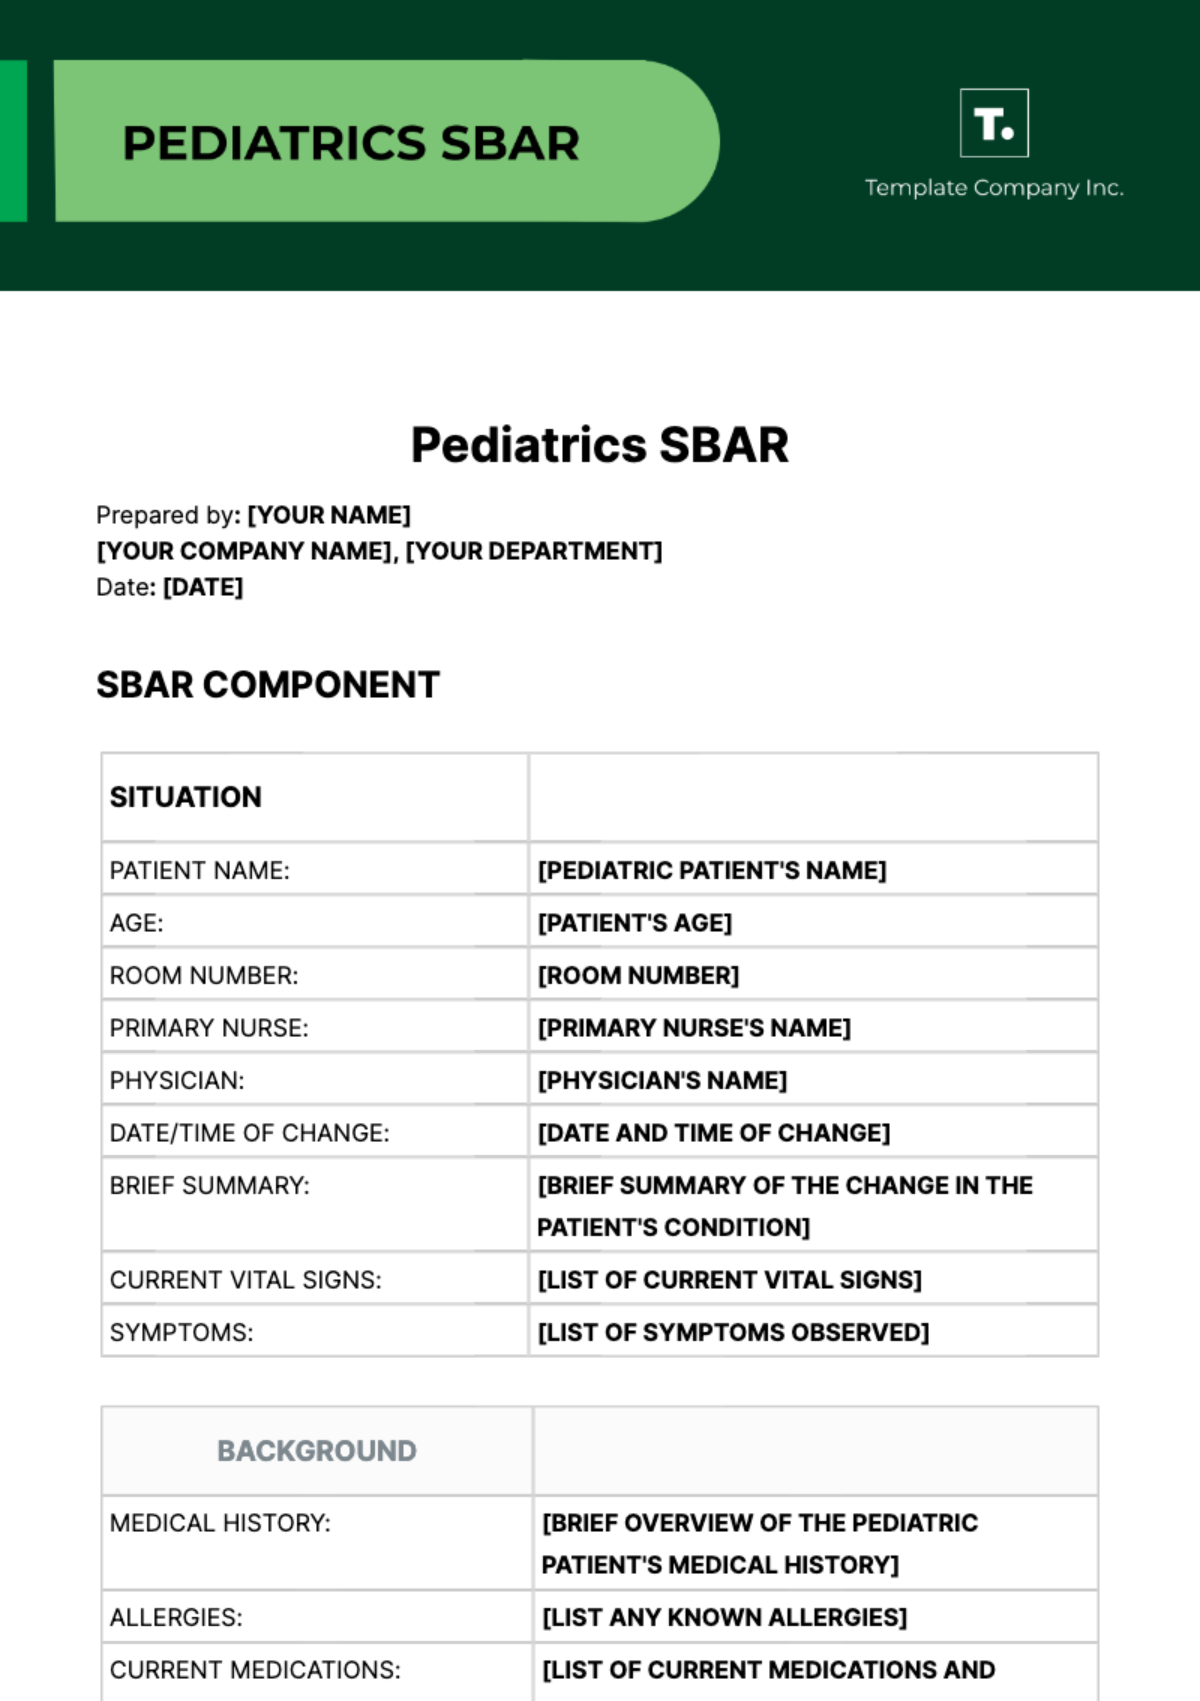 Pediatrics SBAR Template